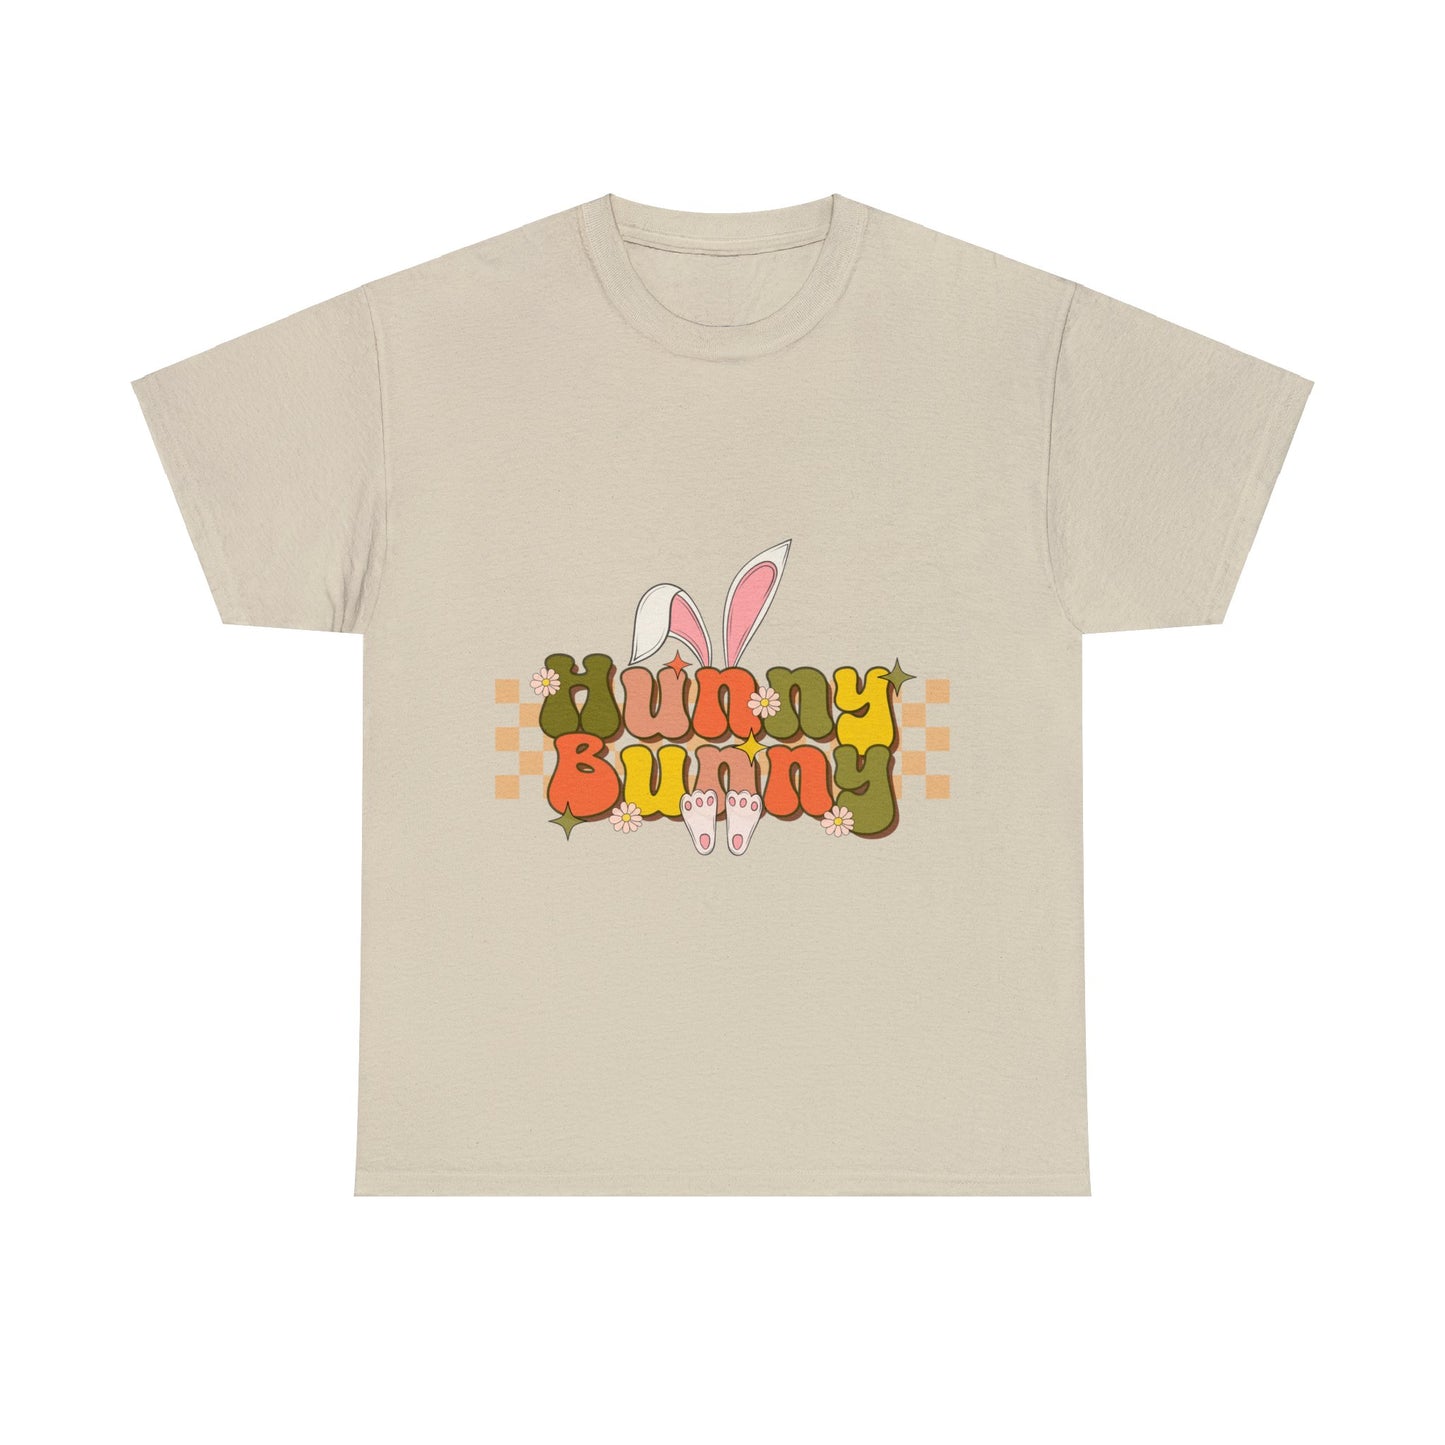 Hunny Bunny - Unisex T-Shirt